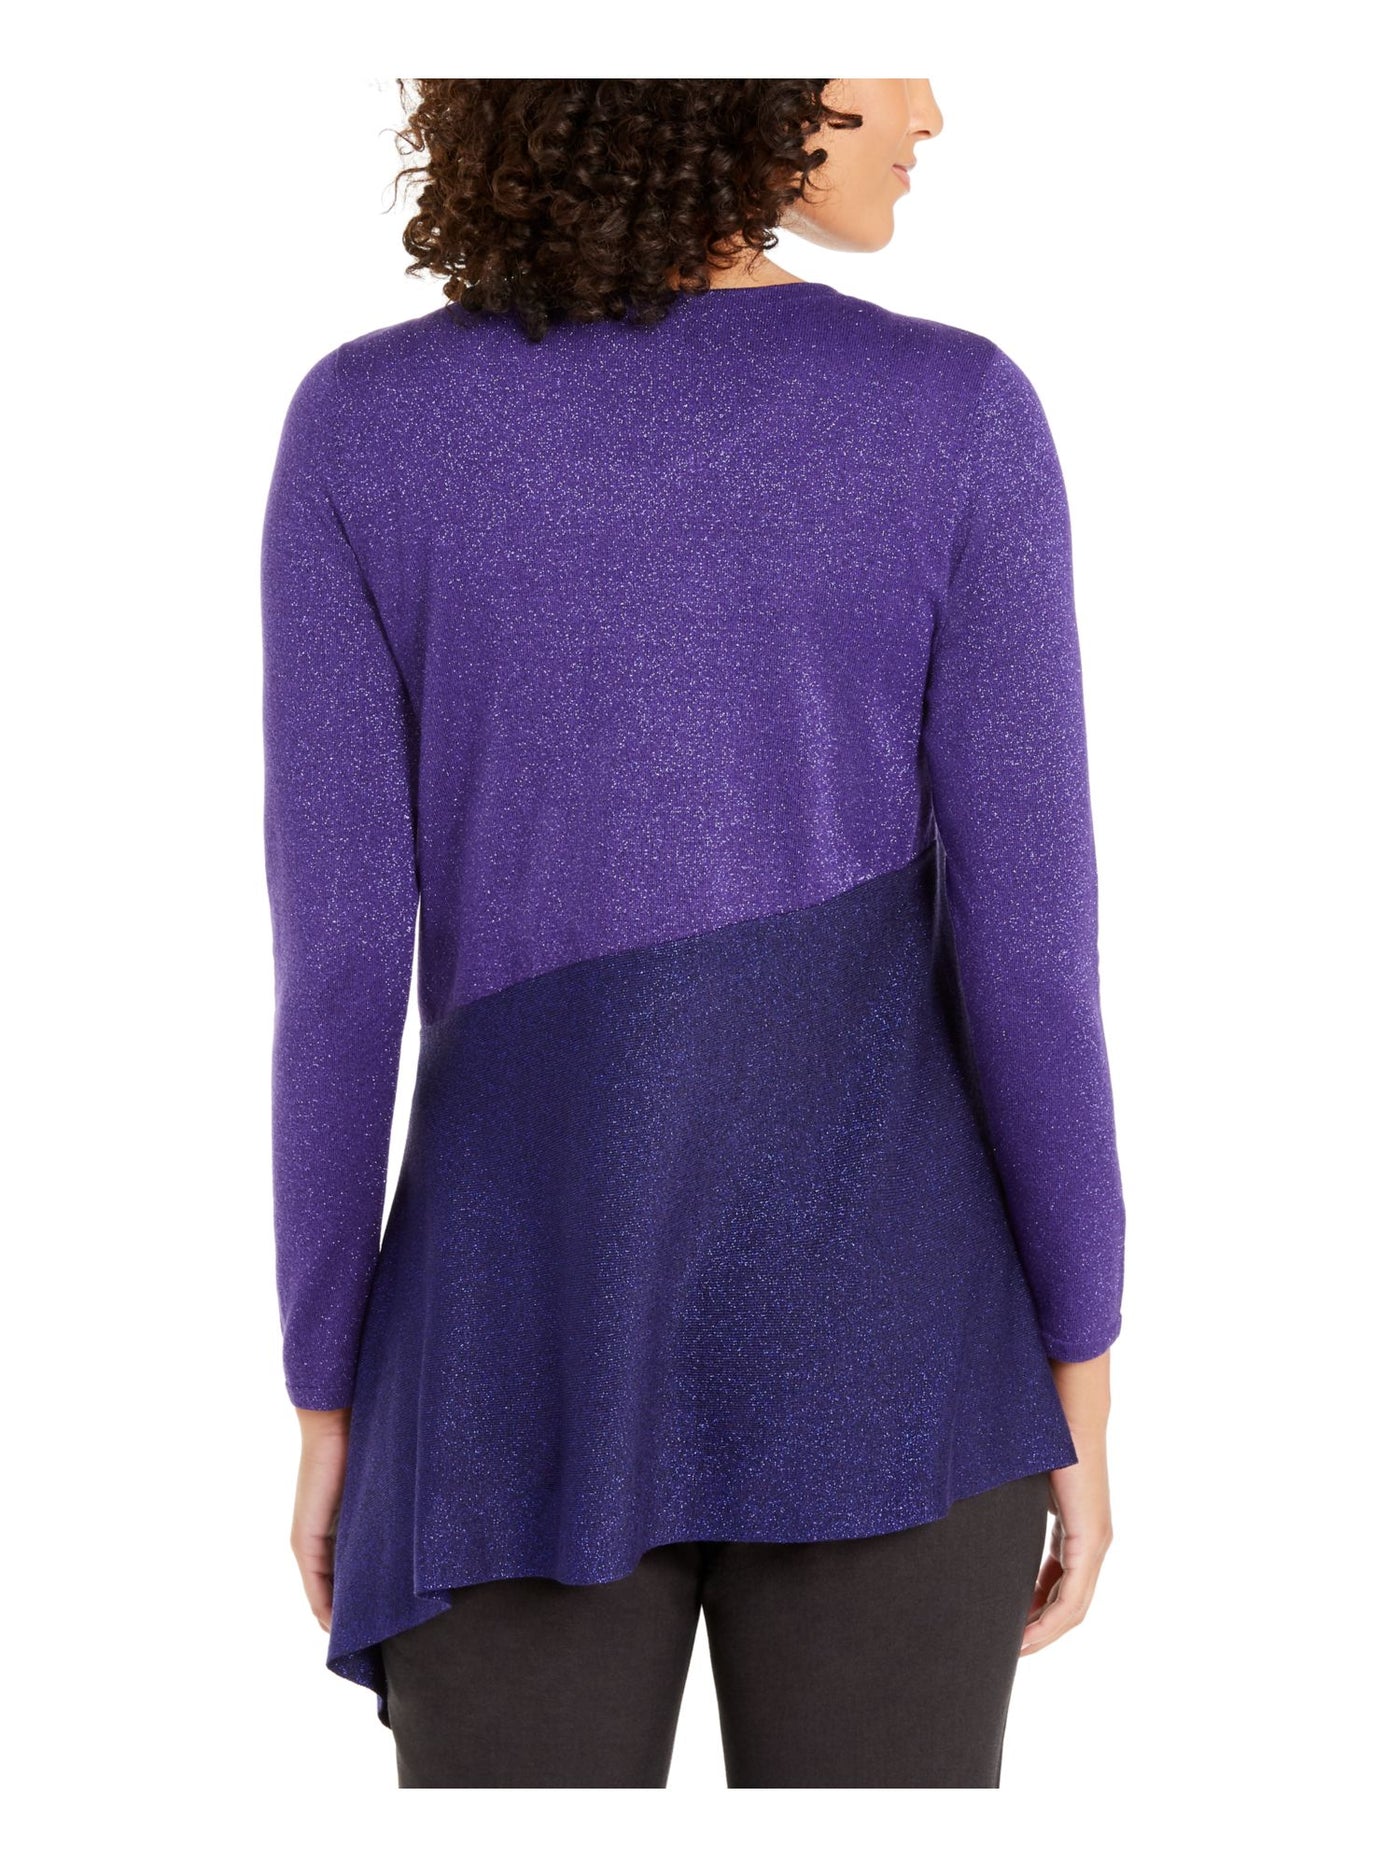 ALFANI Womens Purple Glitter Color Block Long Sleeve Jewel Neck Top S